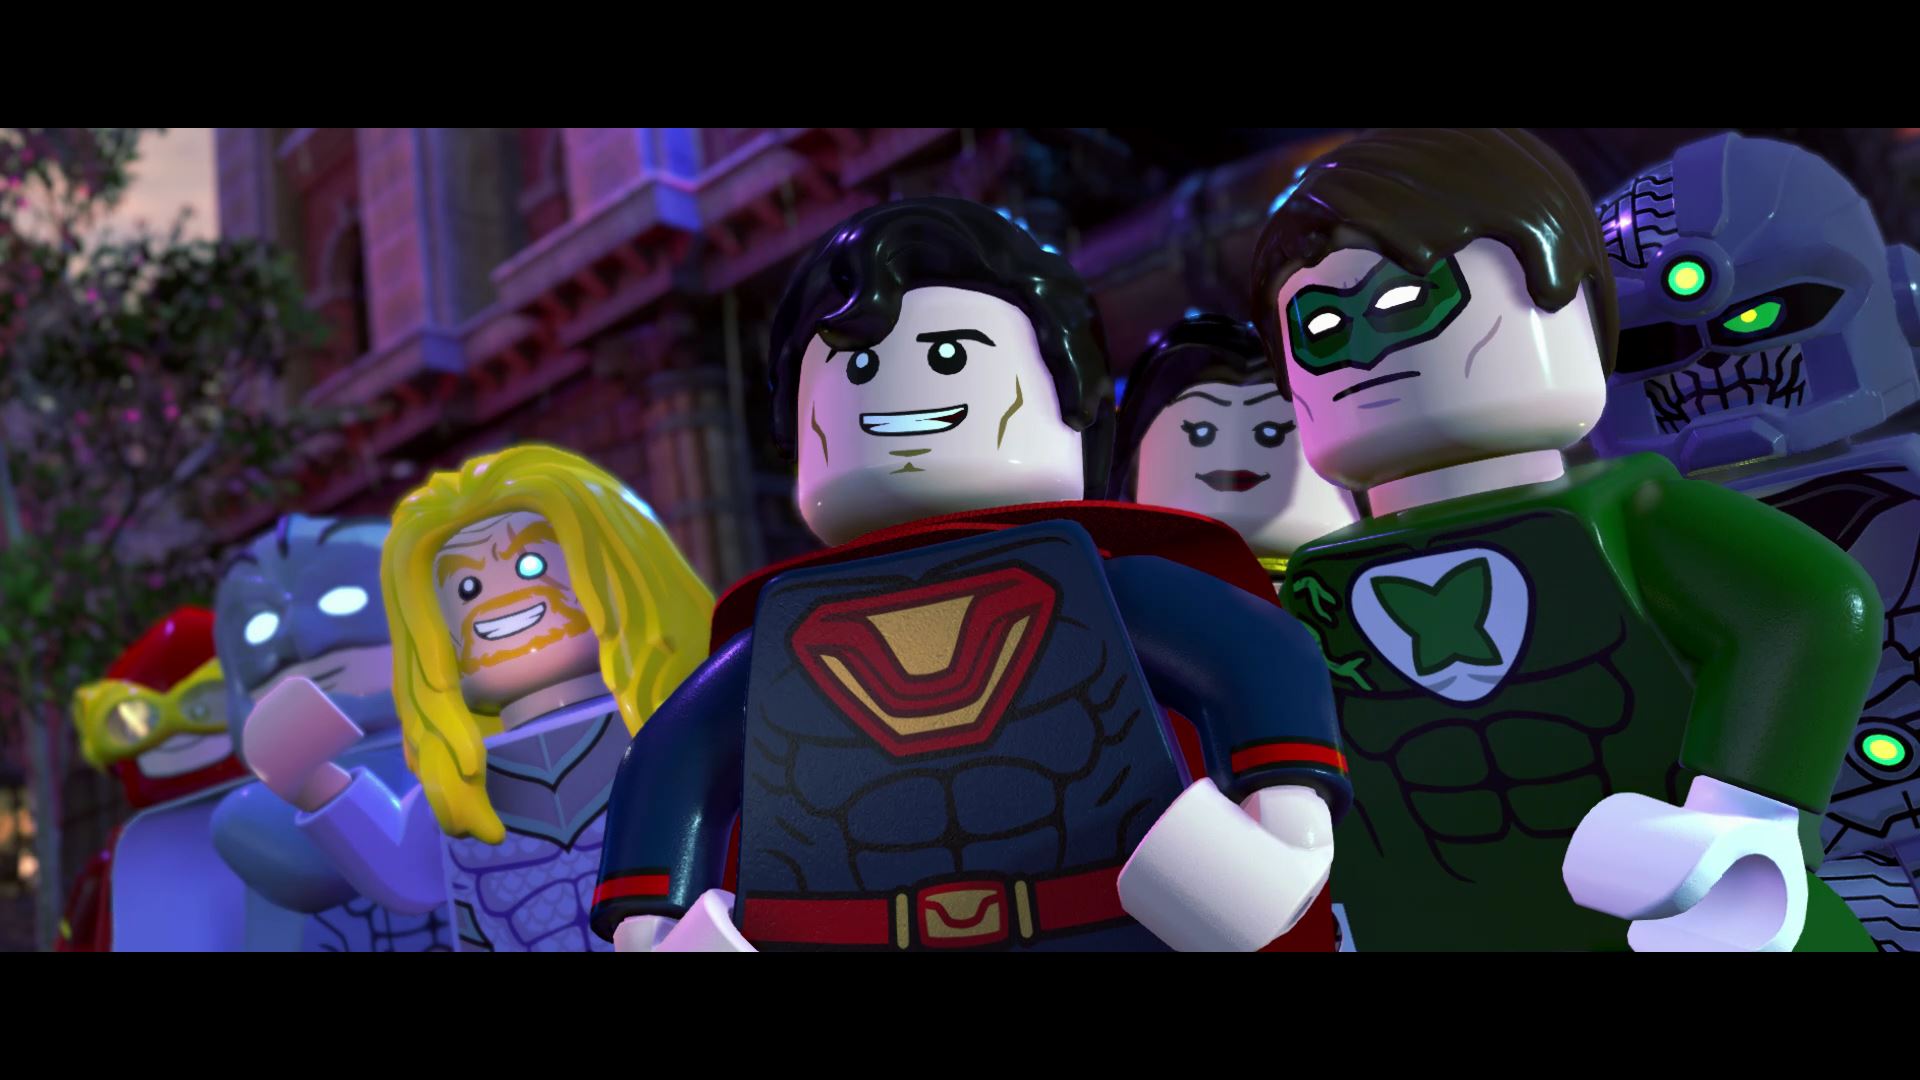 Lego DC Super Villains Cheat Codes - All Characters in LEGO DC Super  Villains